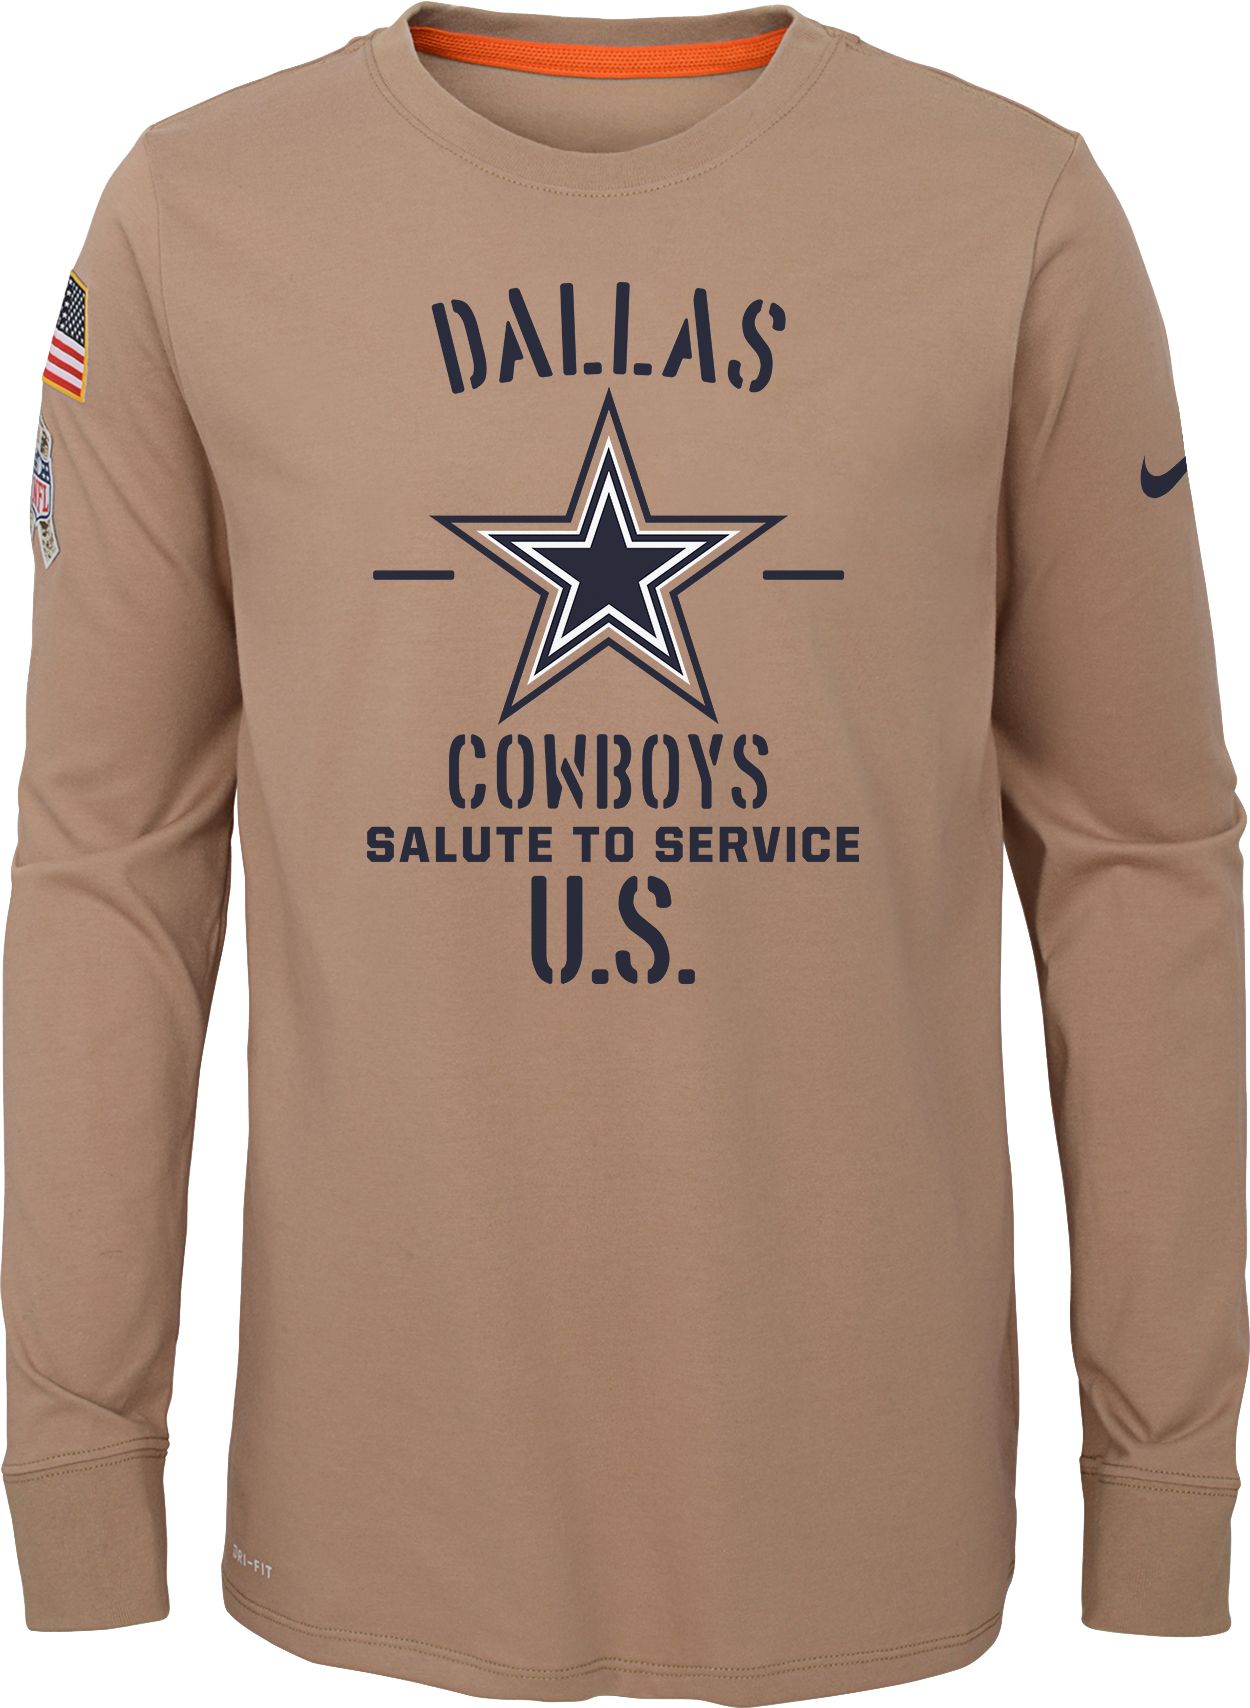 dallas cowboys salute to service shirt